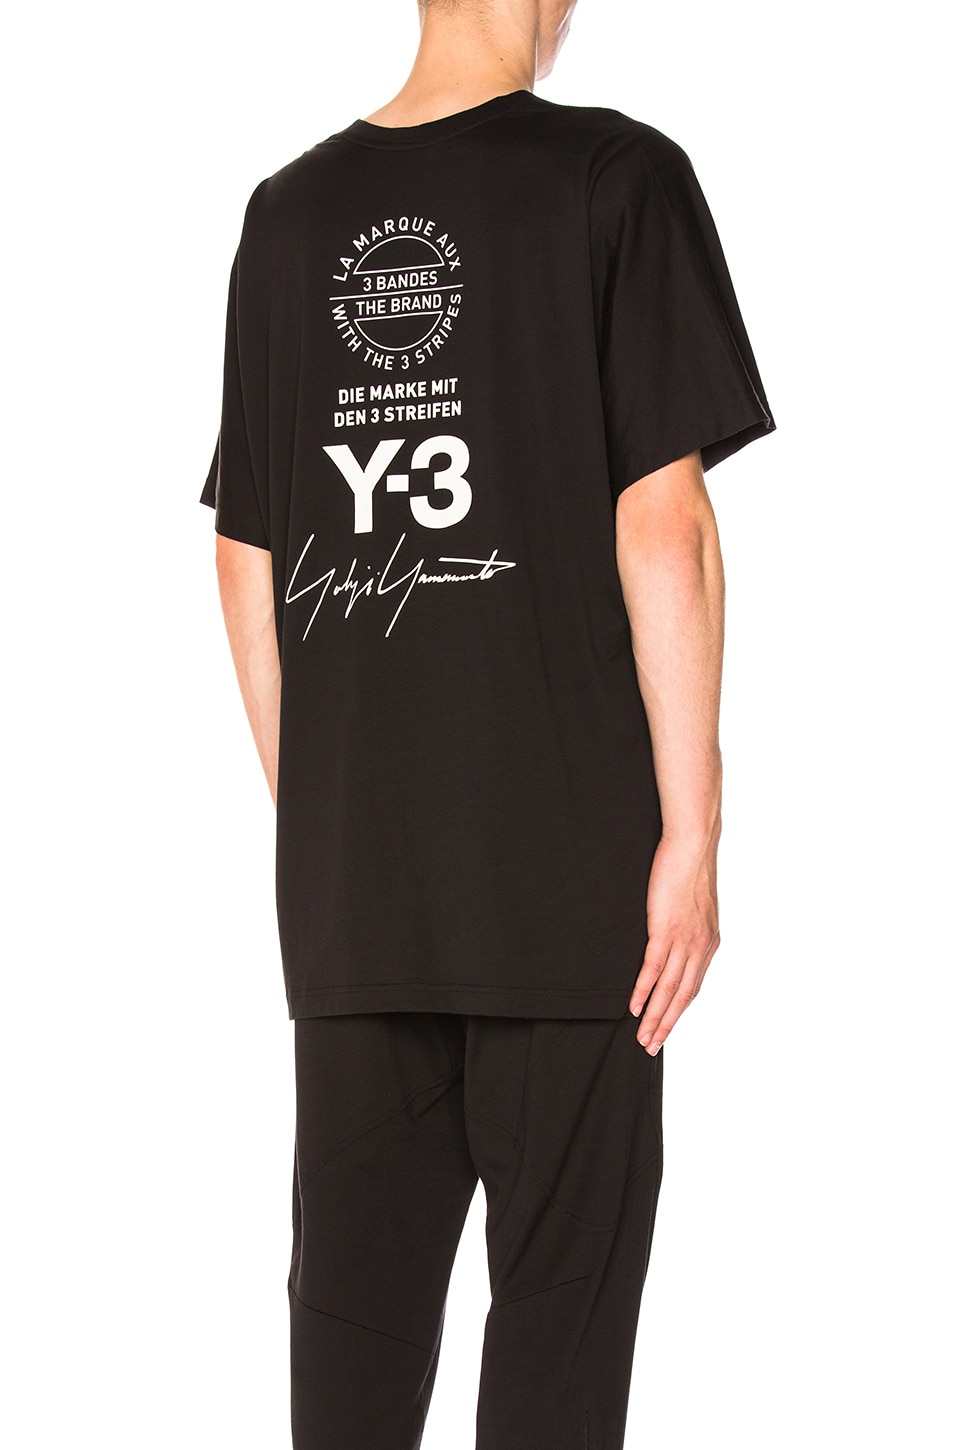 mens y3 t shirt- OFF 68% - www.butc.co.za!